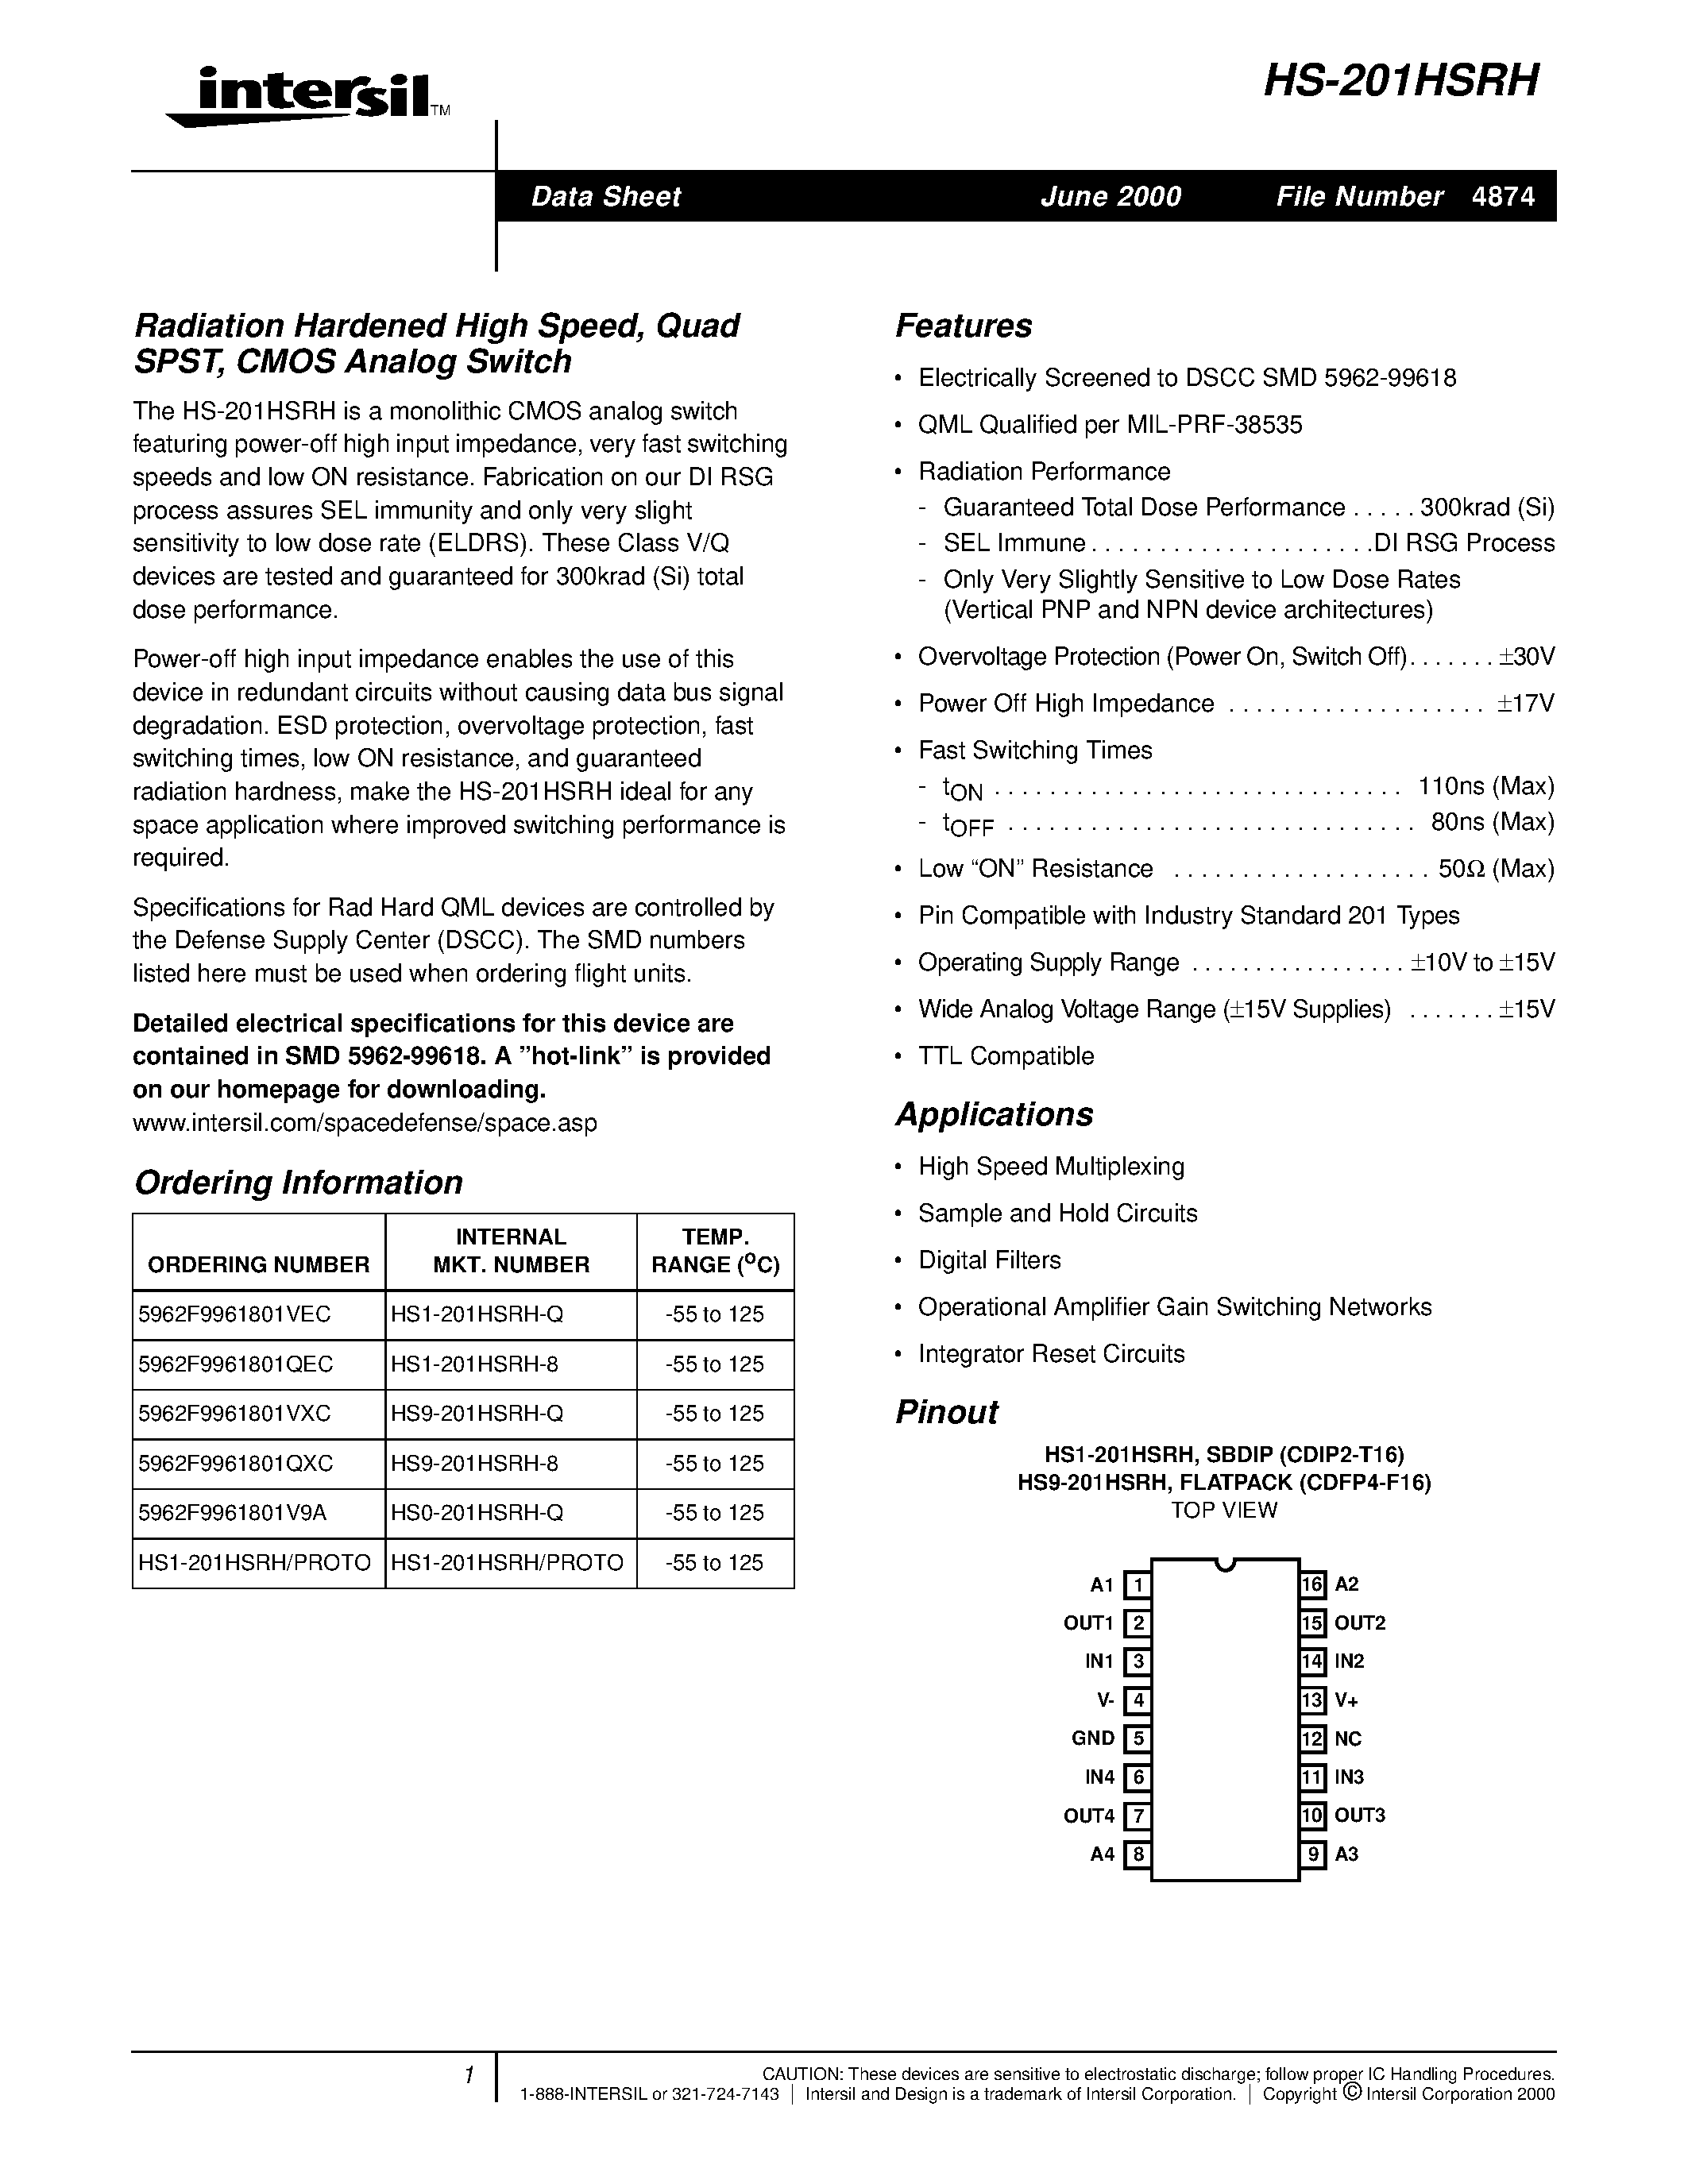 Datasheet HS9-201HSRH-Q - Radiation Hardened High Speed/ Quad SPST/ CMOS Analog Switch page 1